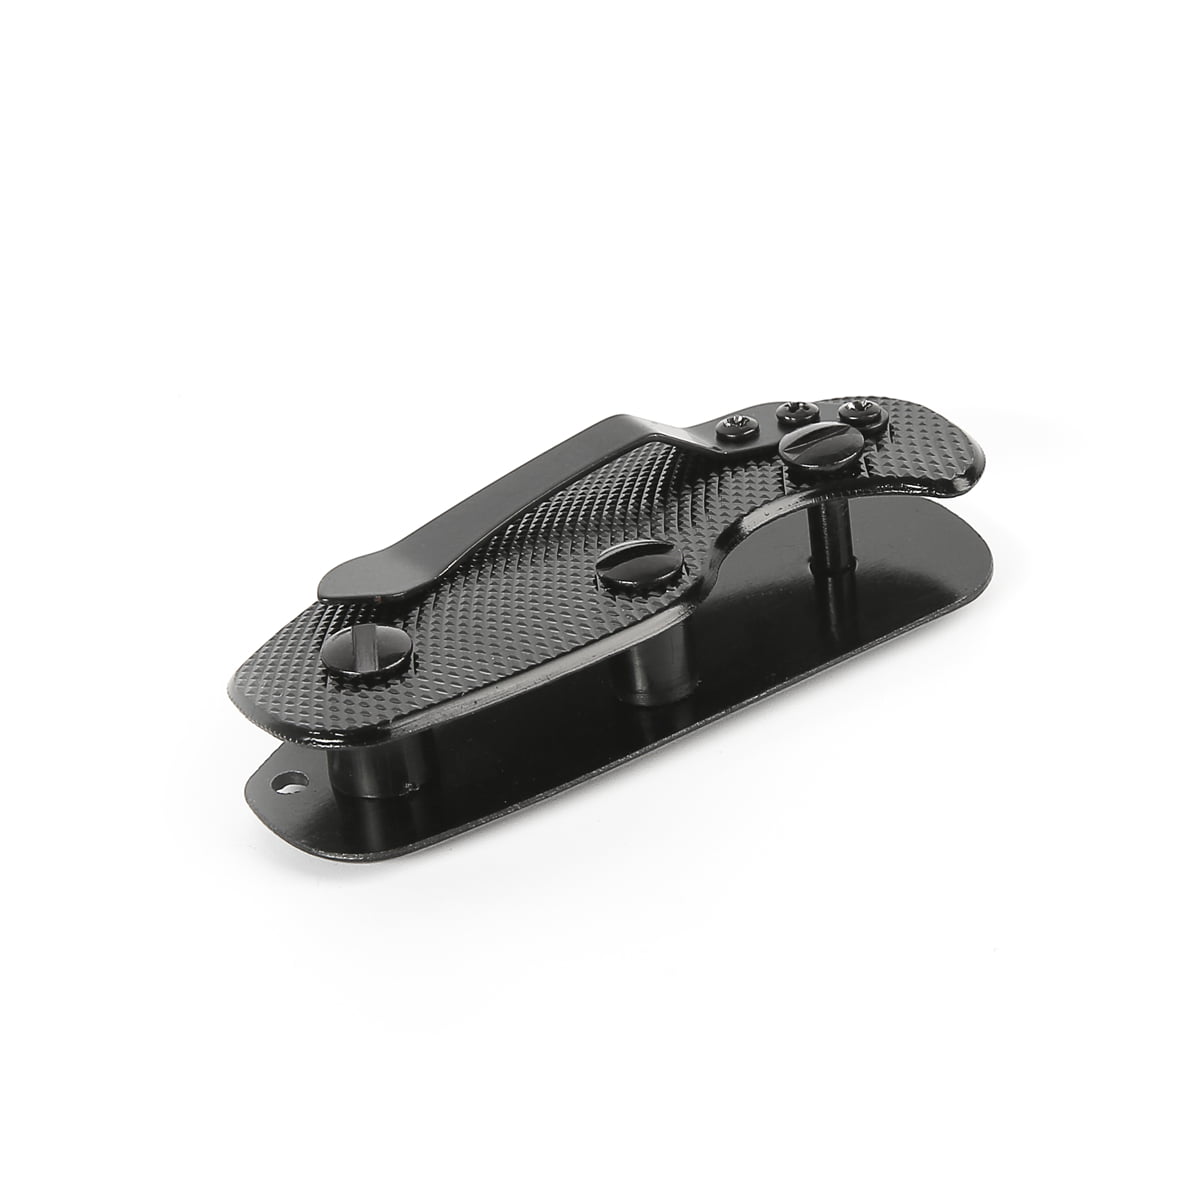 Handy Aluminum Key Holder Organizer Clip Folder Keychain Gadget EDC Pocket Tool 